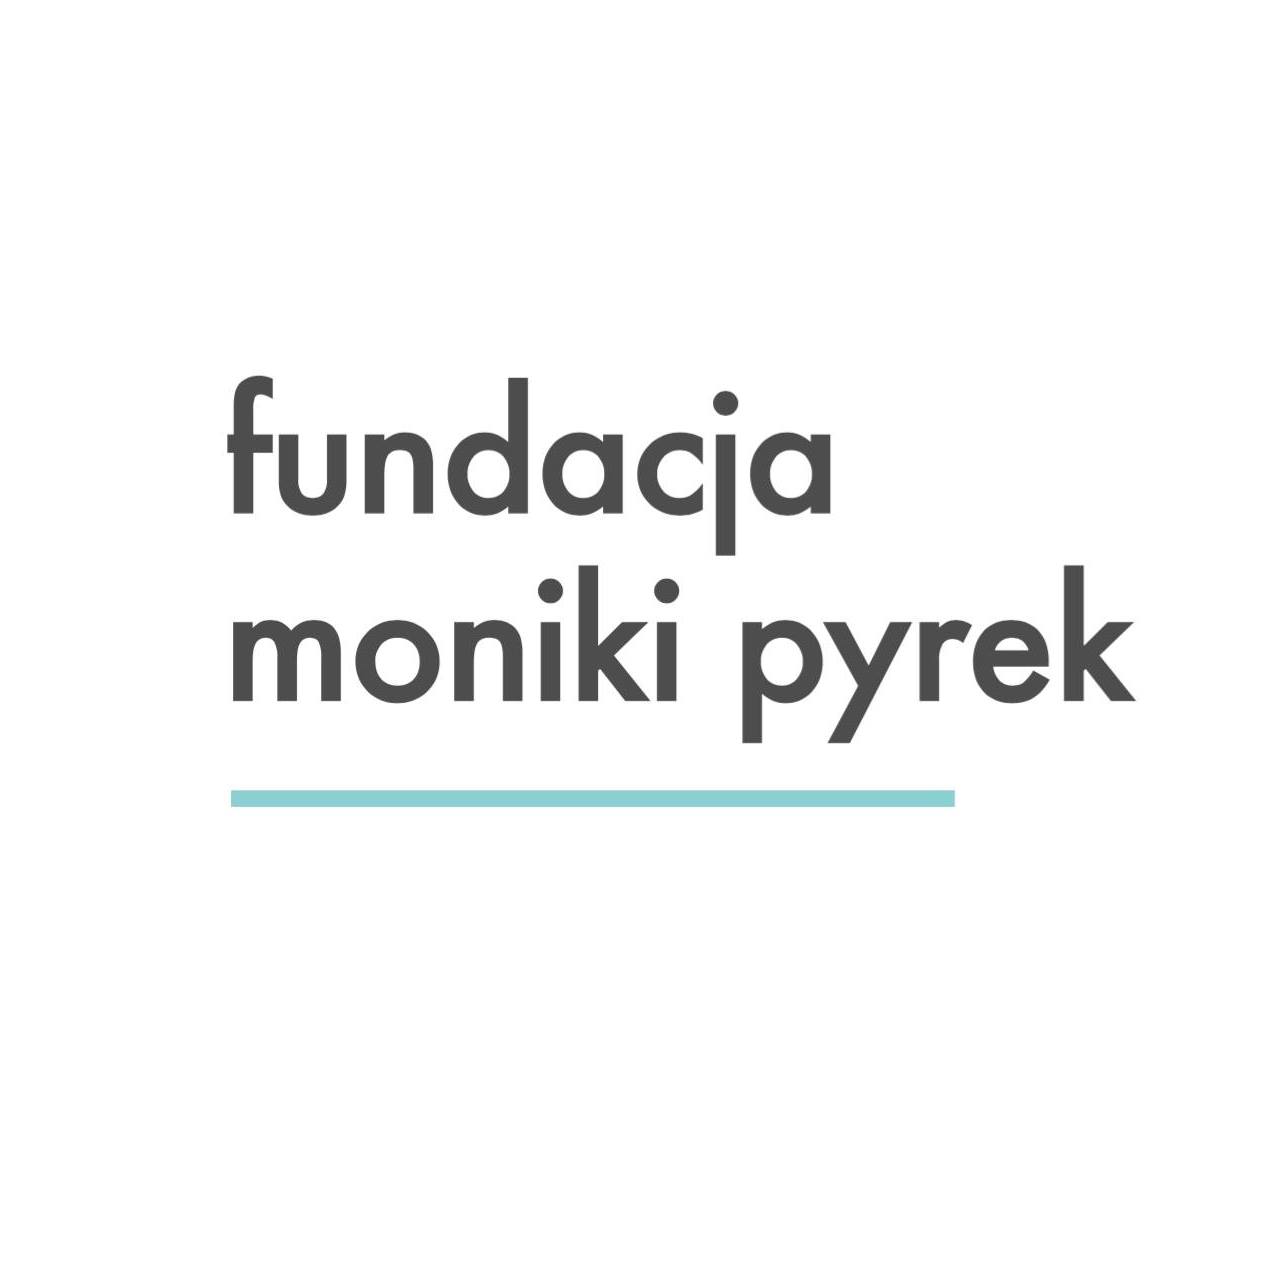 Fundacja Moniki Pyrek